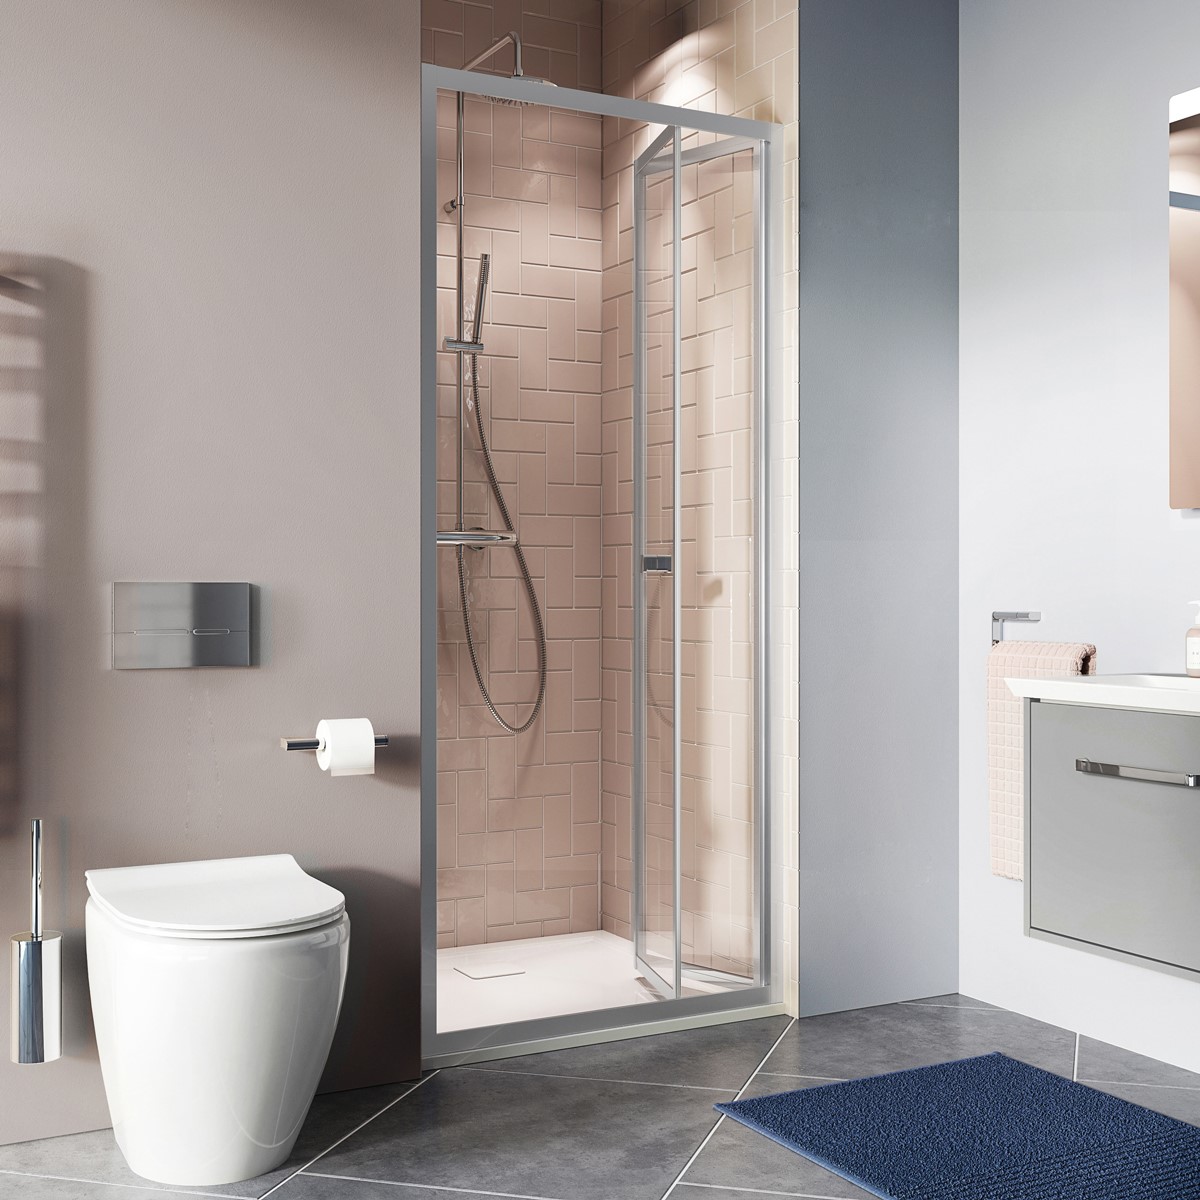 Small modern bathroom | Create a beautiful minimalist bathroom design with space-saving bi-fold shower doors